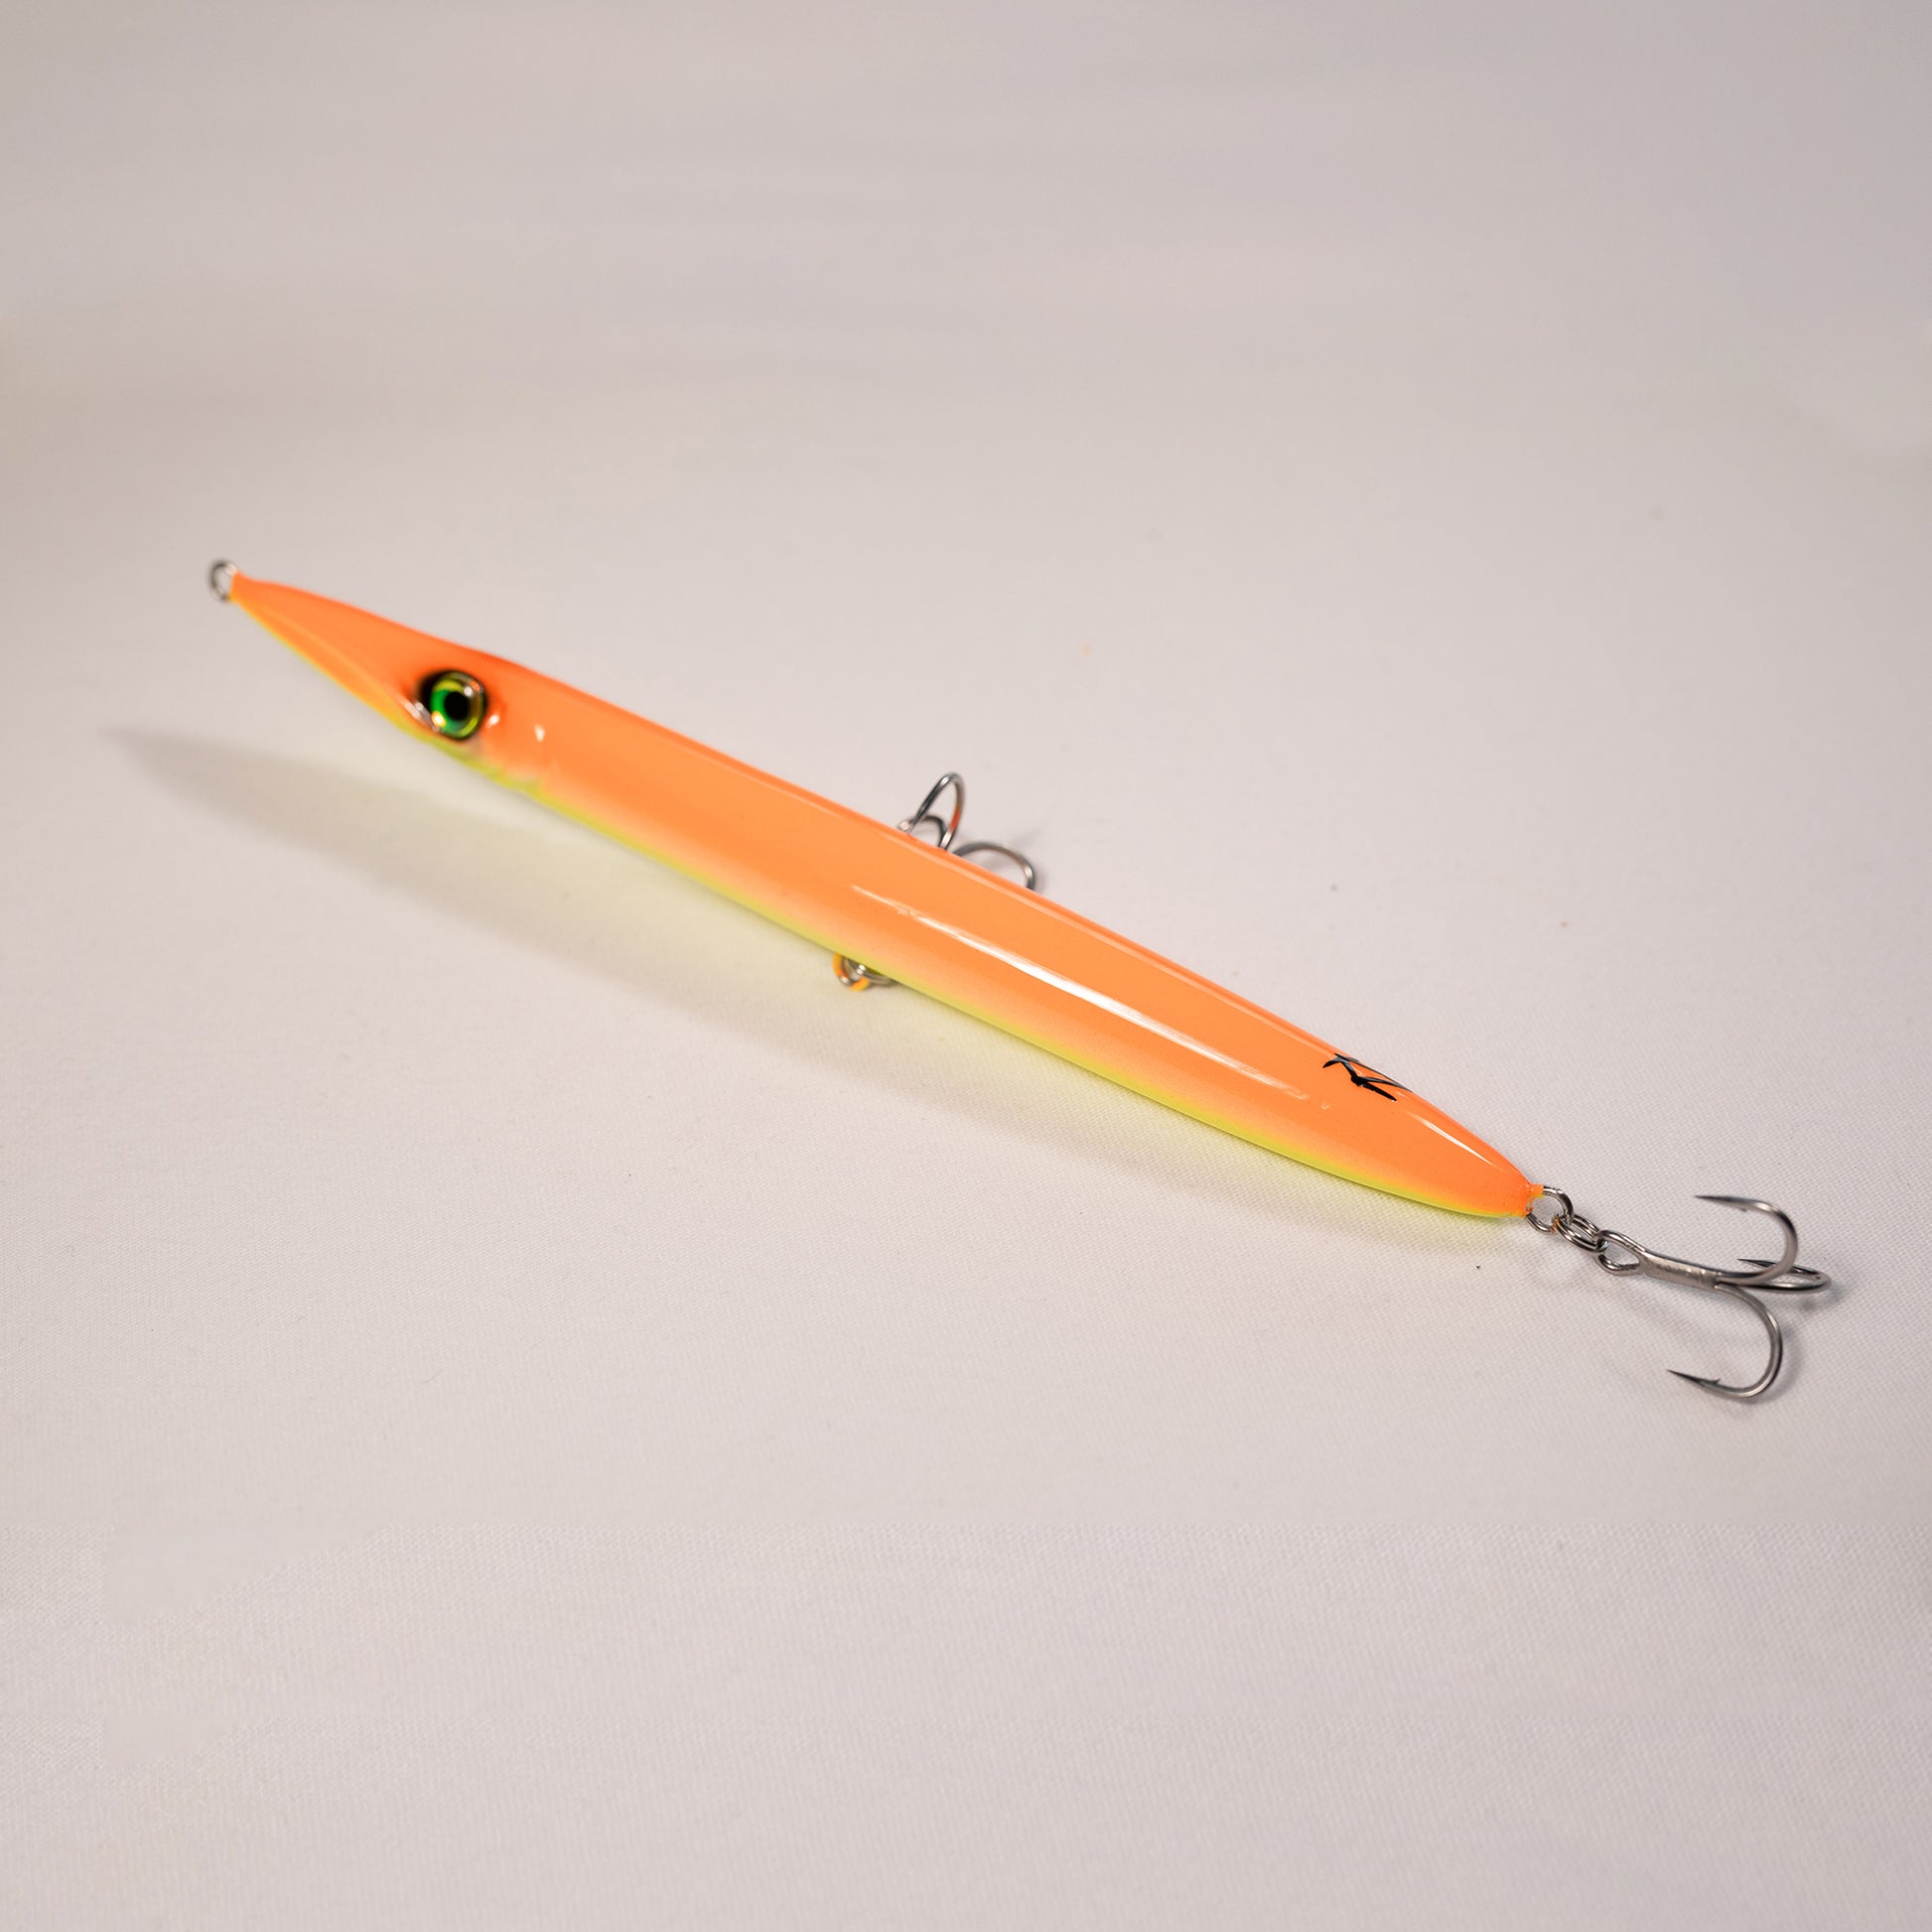 KZ BR 200 UV Orange Handmade Lure for Bluefish – KZ Handmade Lures